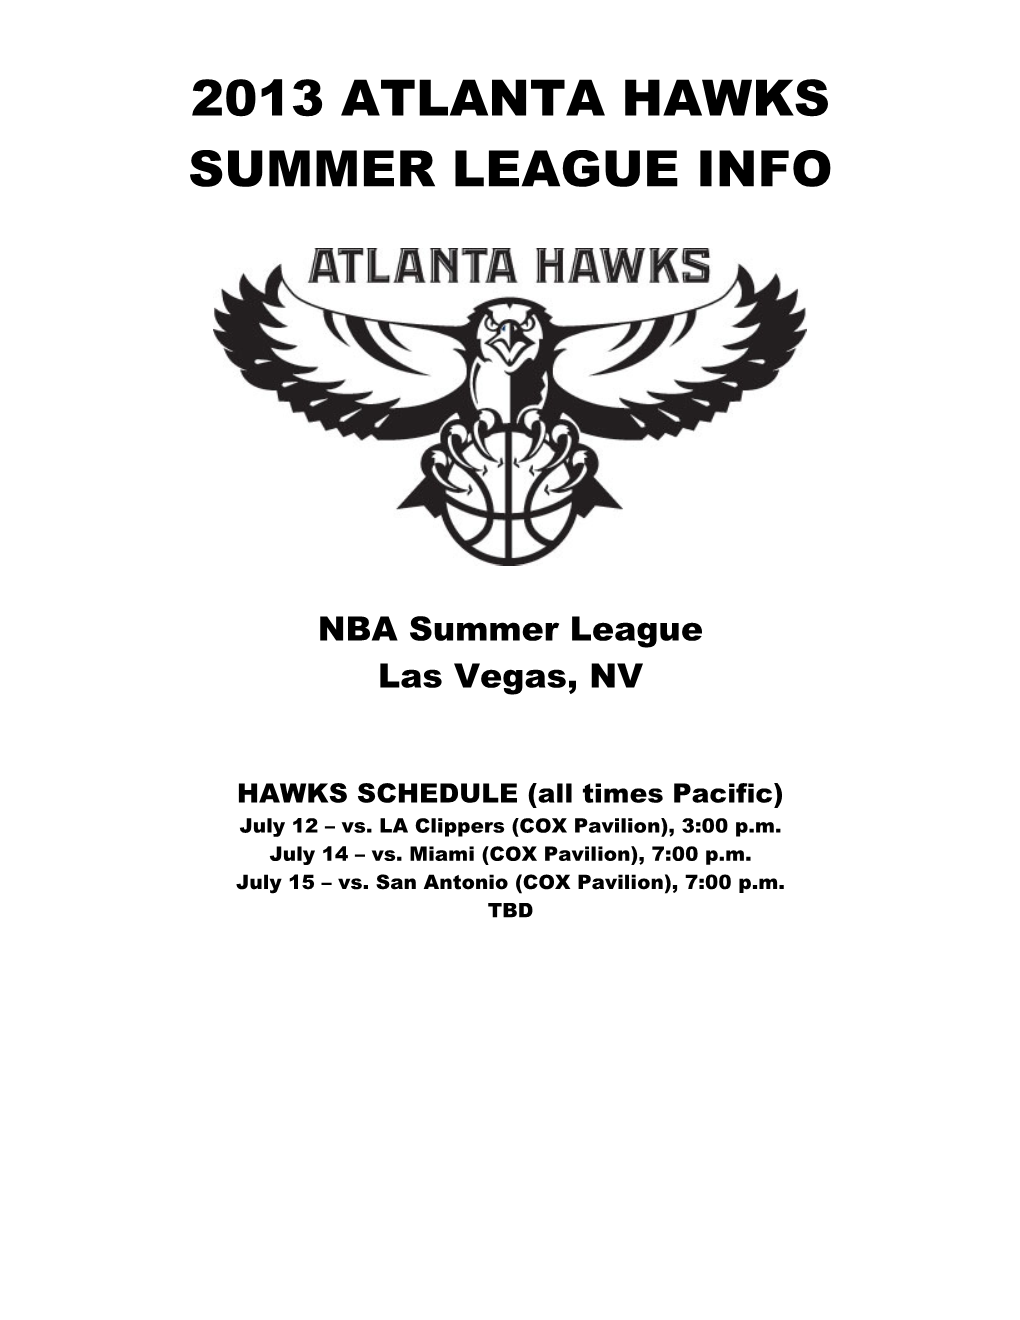 2013 Atlanta Hawks Summer League Info